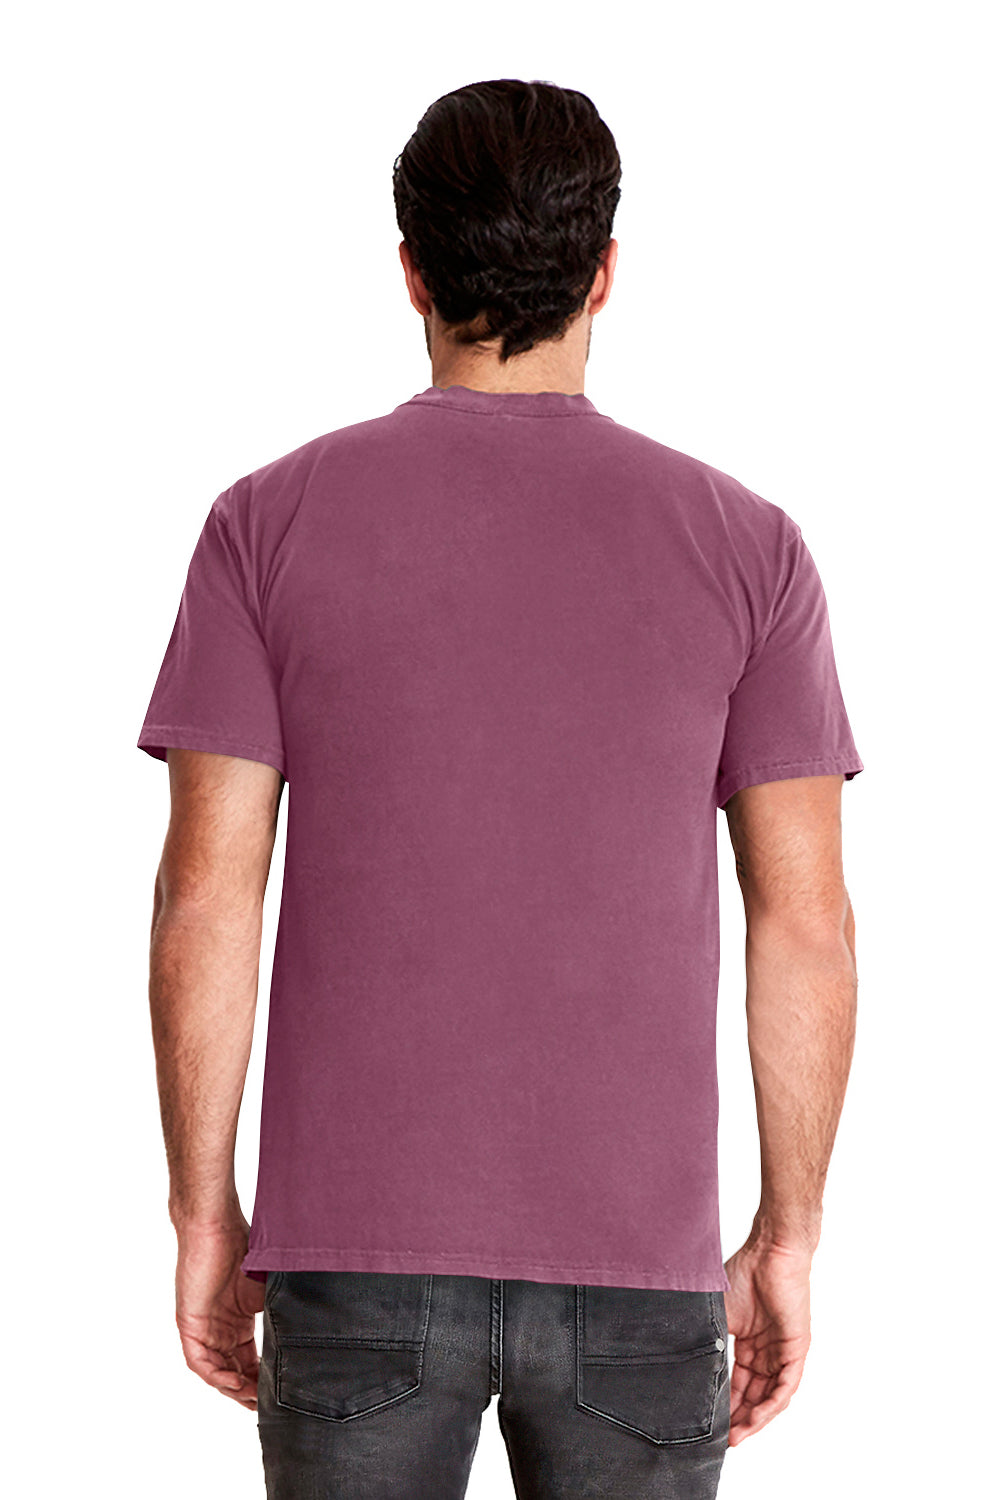 Next Level 7415 Mens Inspired Dye Jersey Short Sleeve Crewneck T-Shirt w/ Pocket Shiraz Purple Back